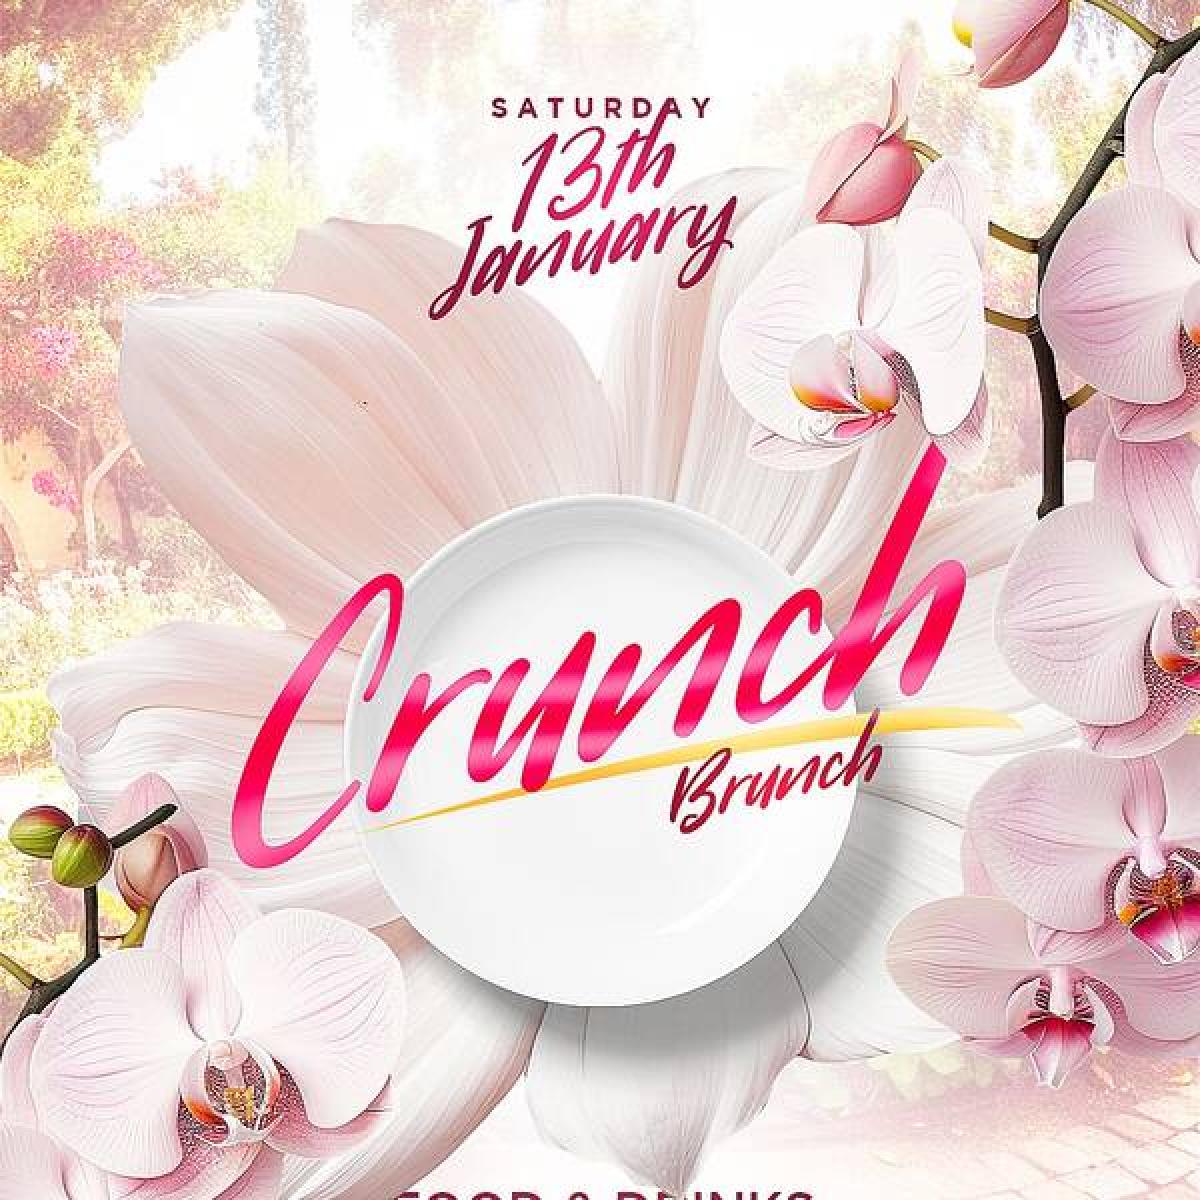 Crunch- Carnival Brunch flyer or graphic.